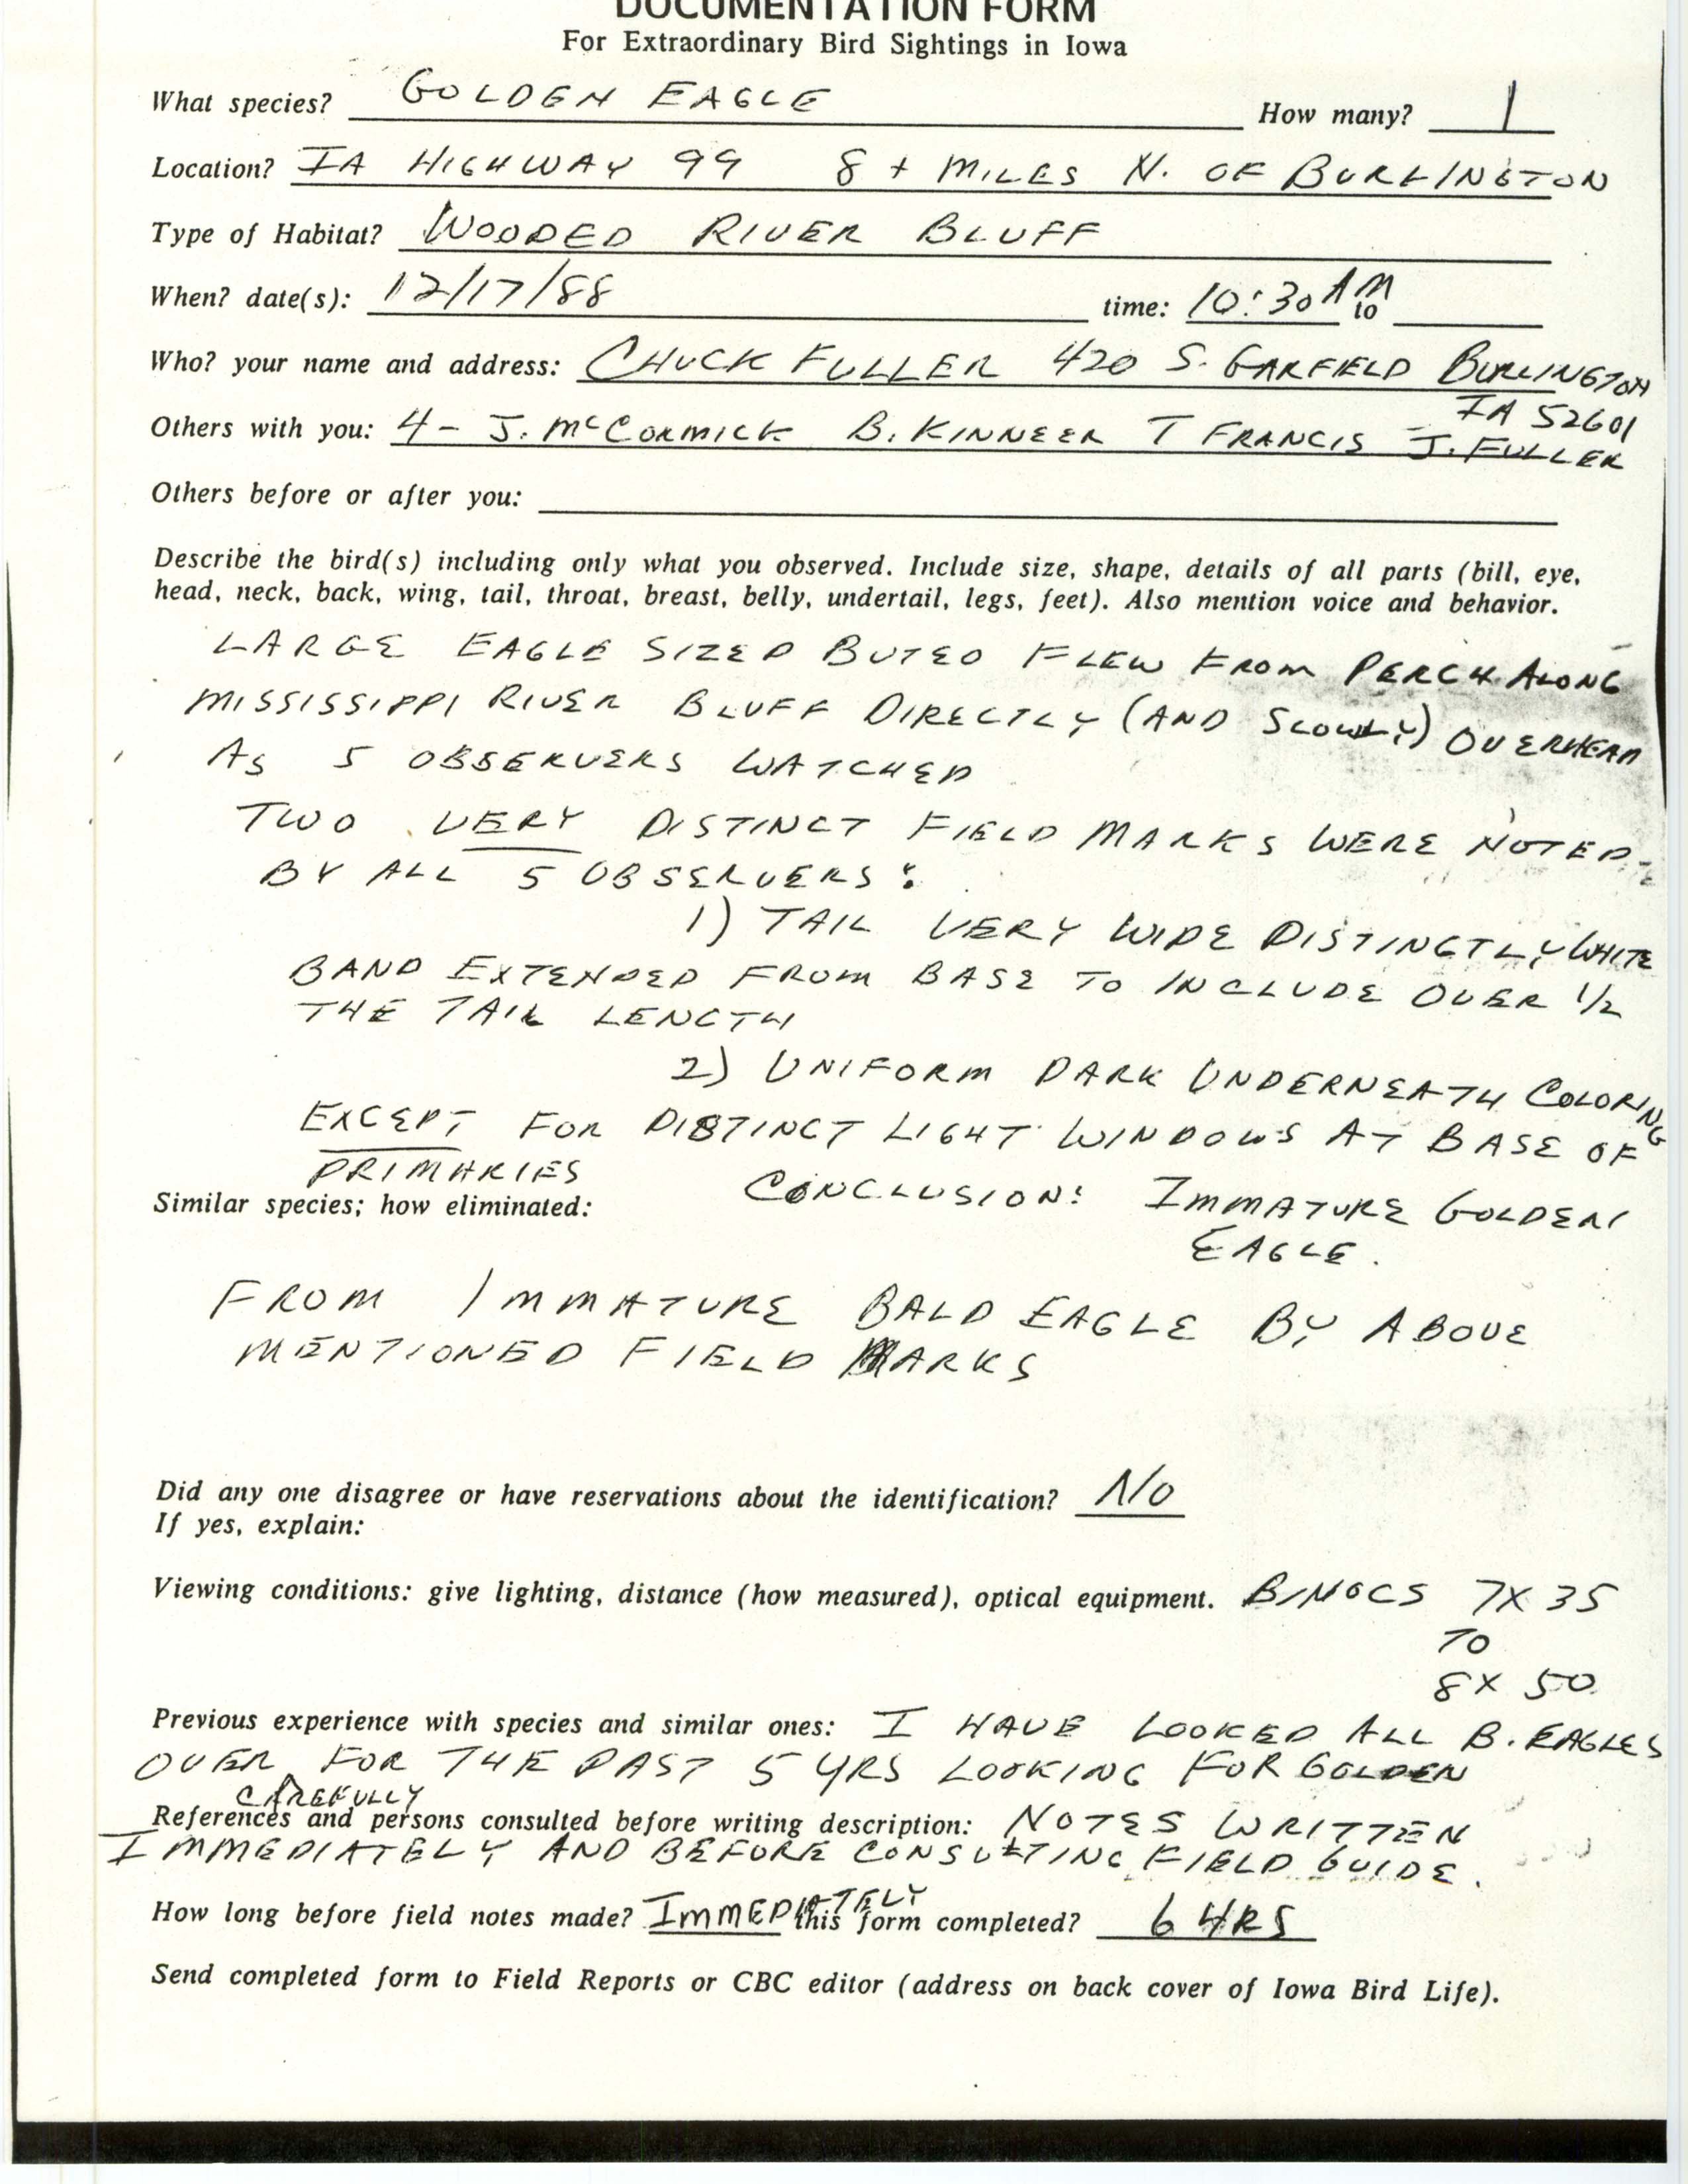 Rare bird documentation form for Golden Eagle north of Burlington, 1988